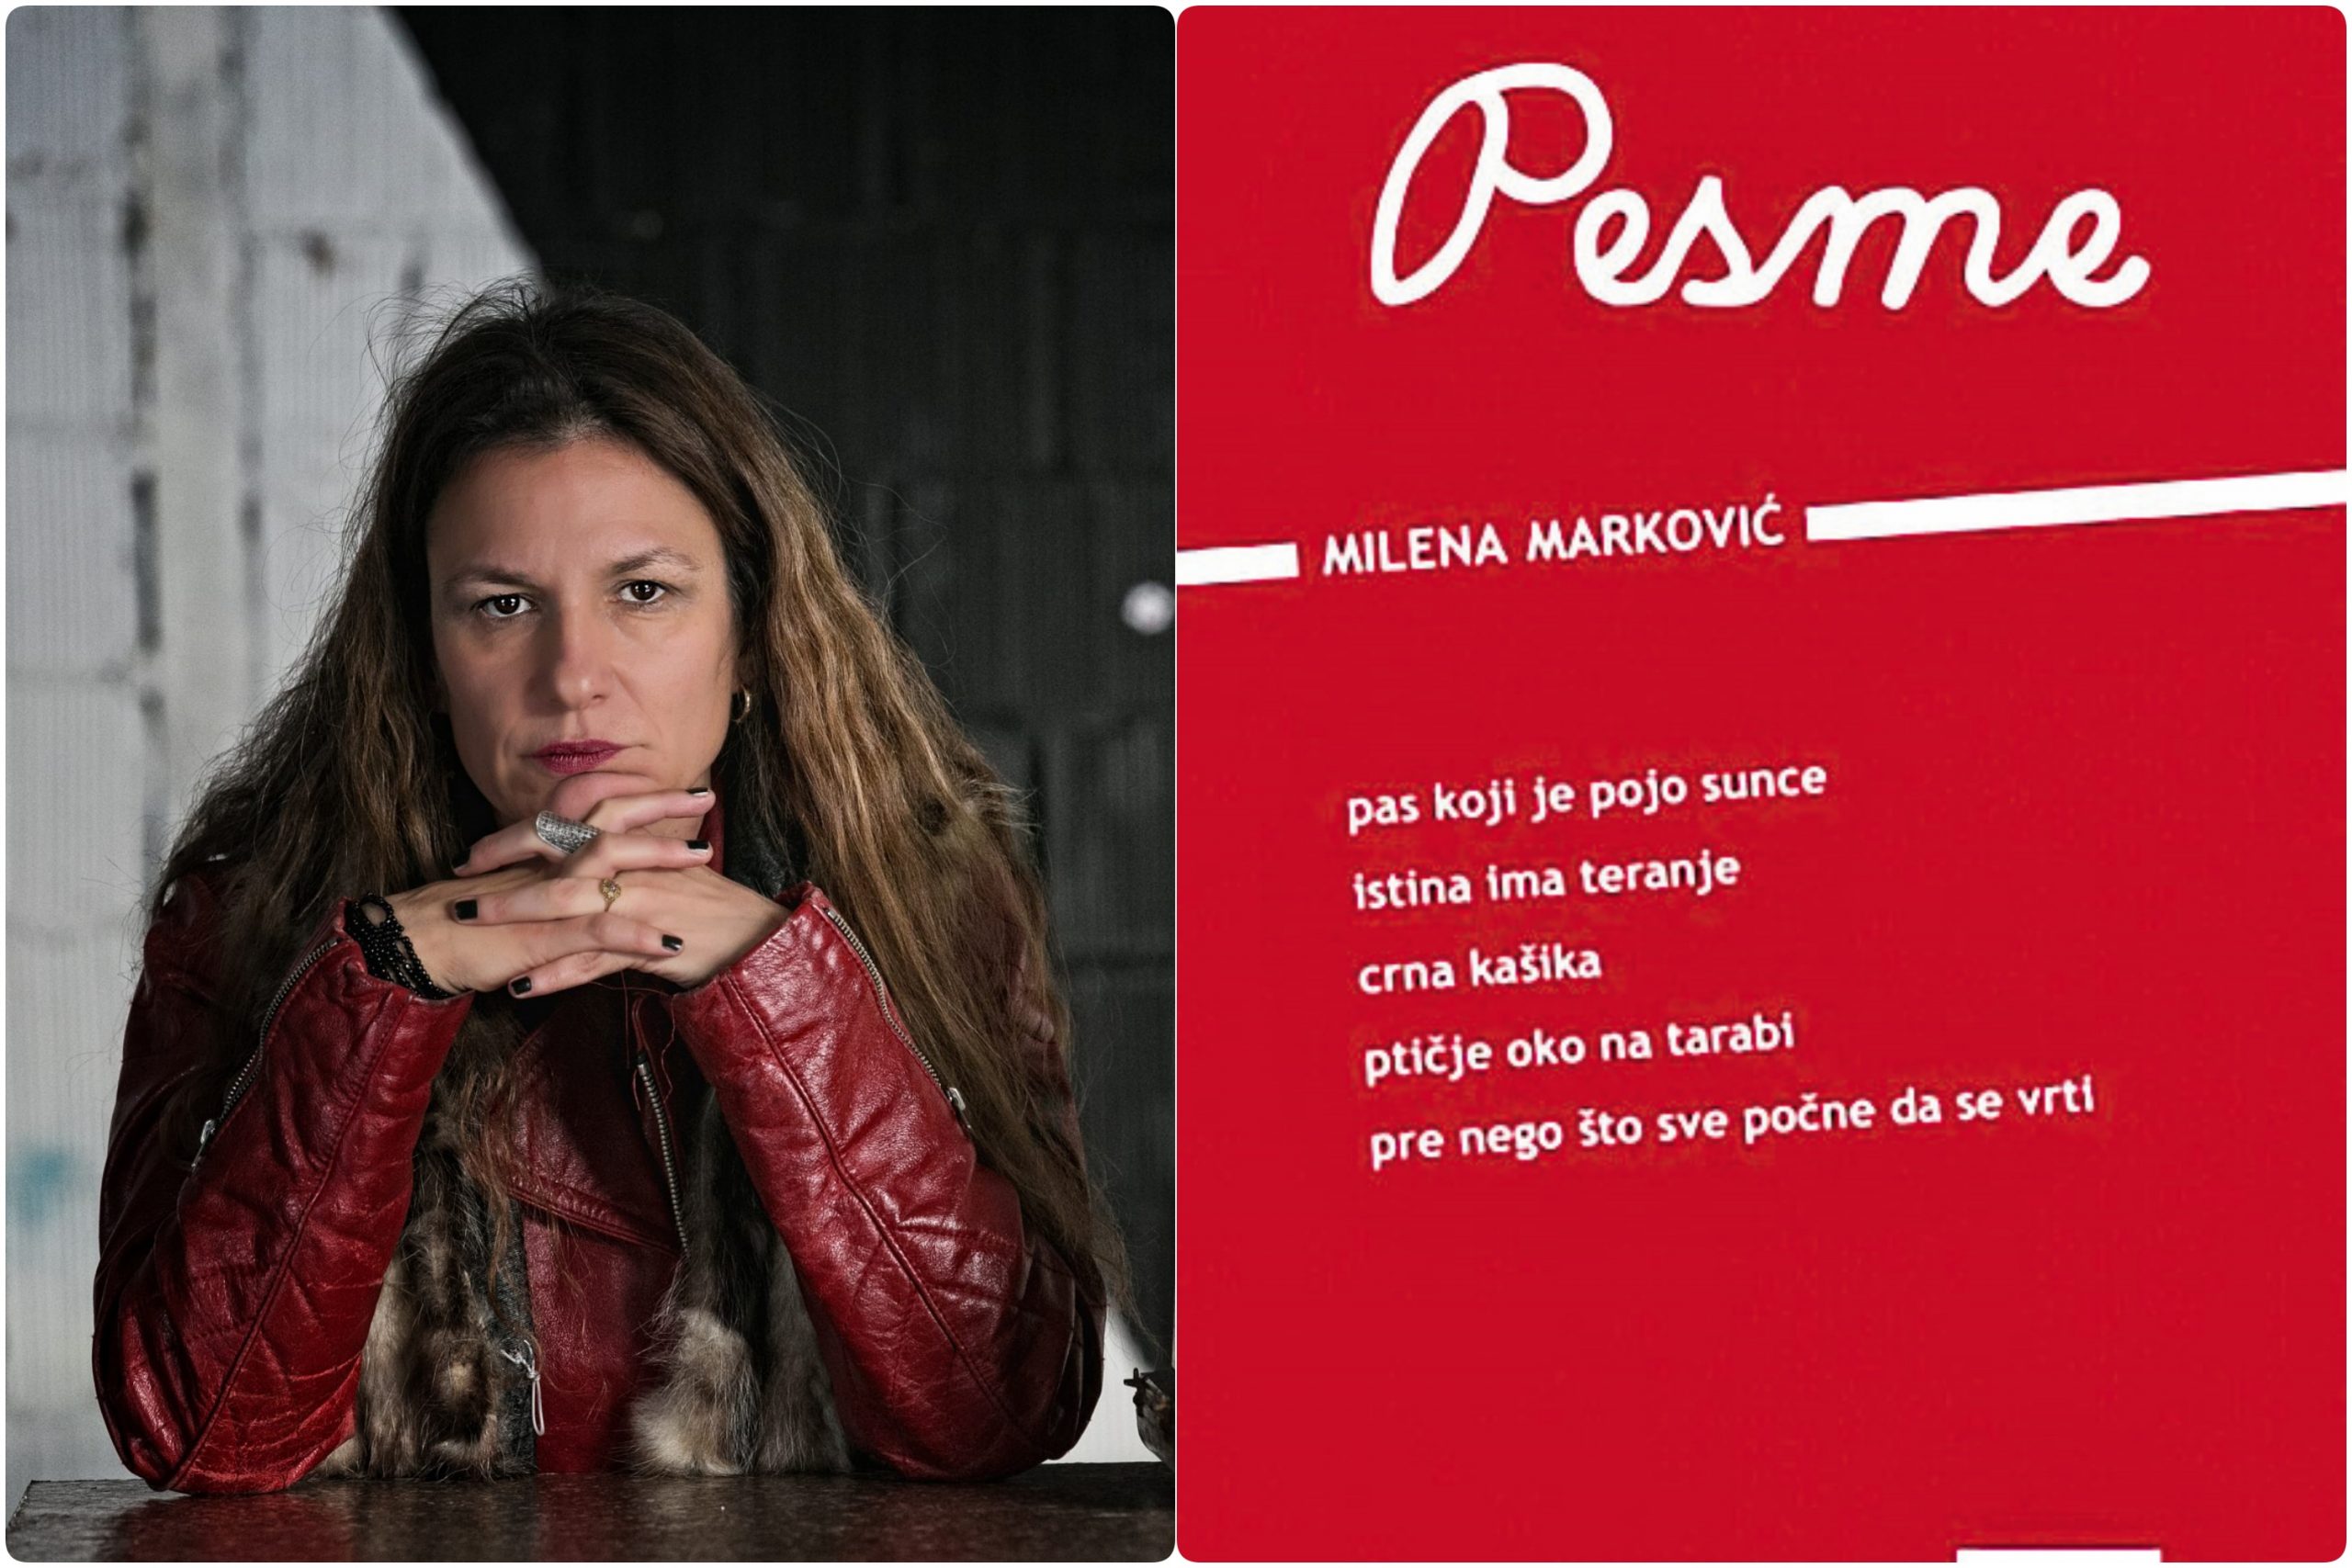 Milena Markovic